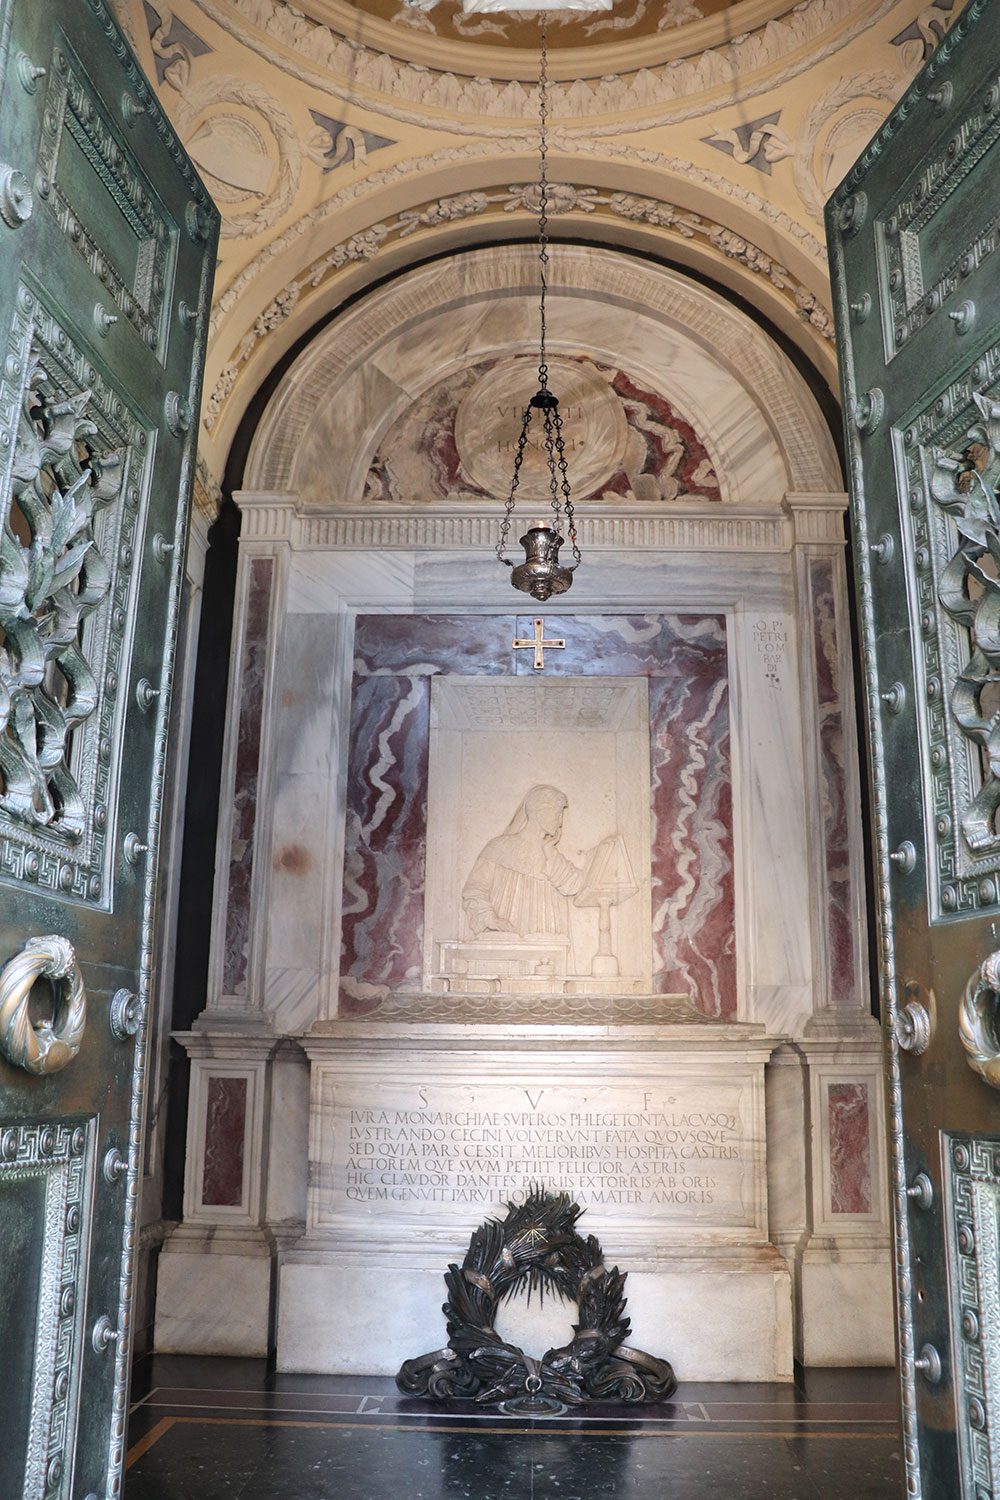 Dante Alighieri tomb, Ravenna